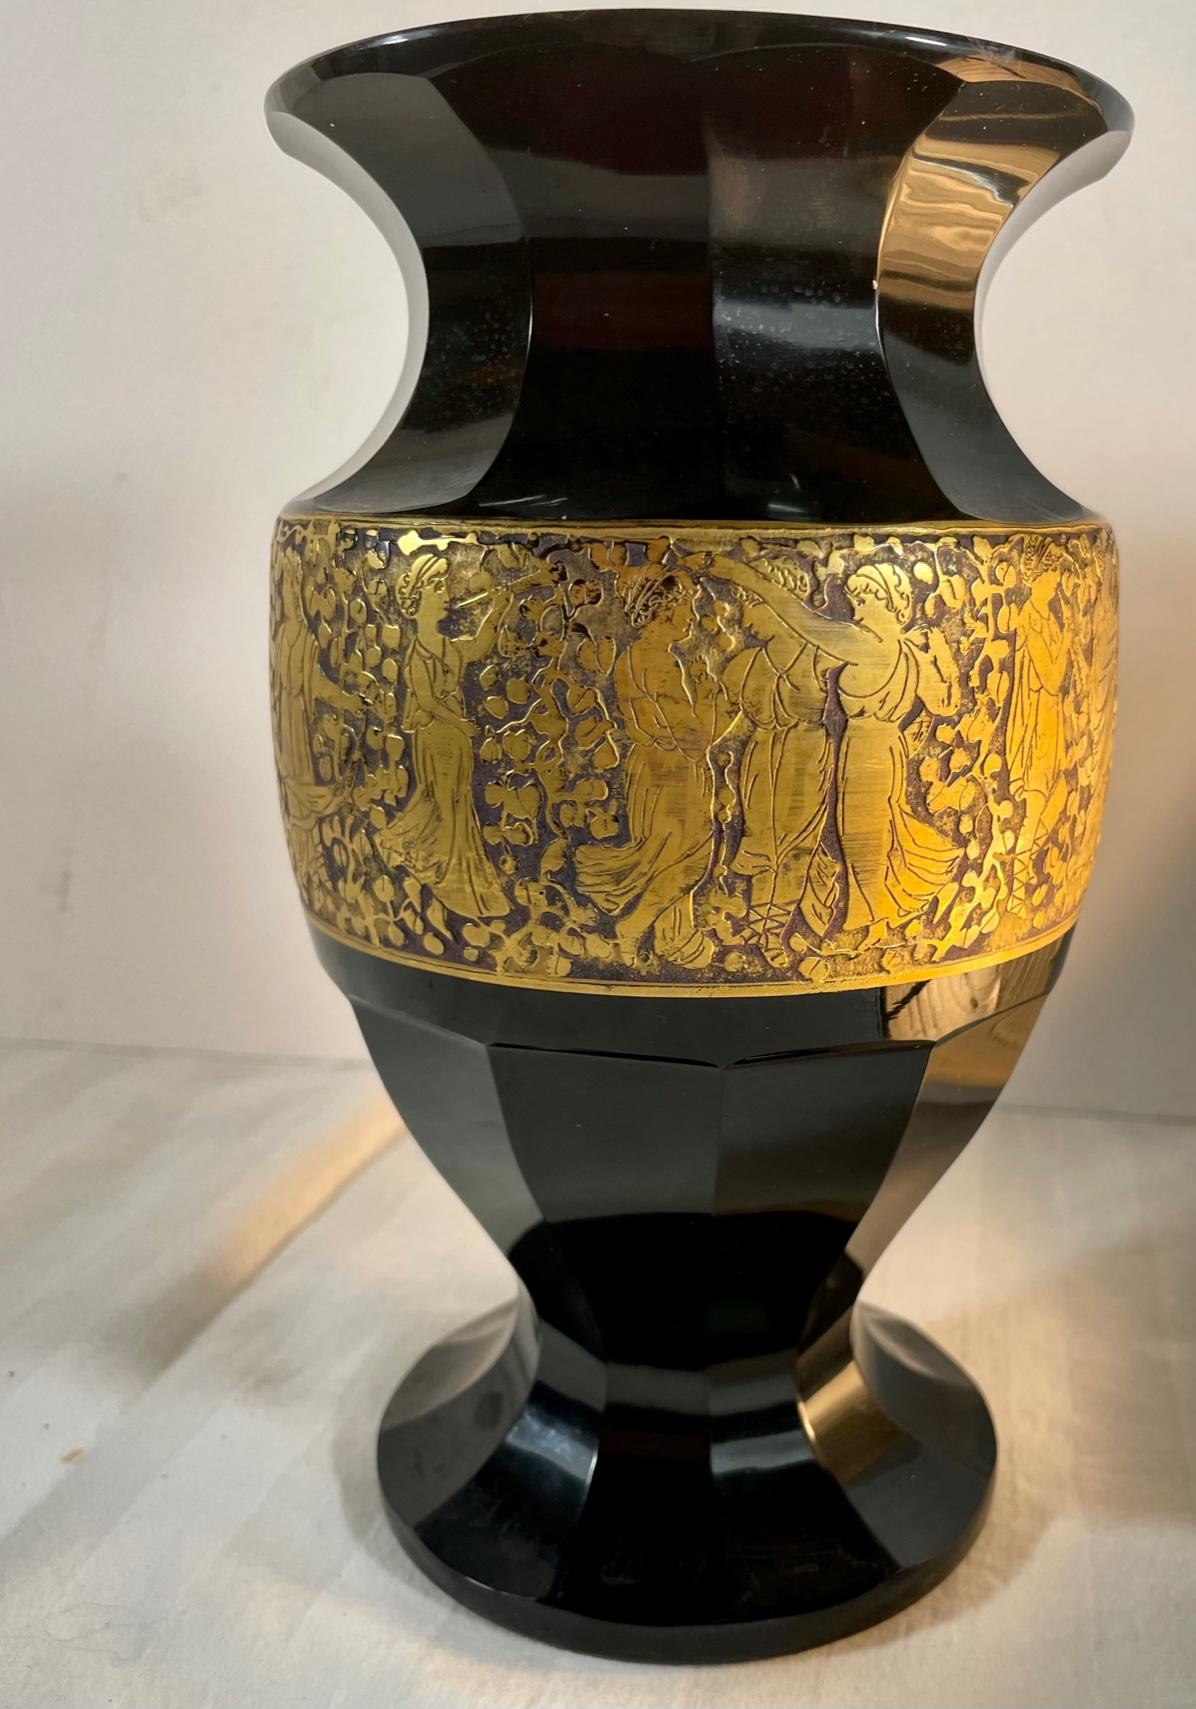 Czech Art Nouveau Haida Moser Amethyst Amphora Vase by Adolf Rasche c1910, Signed.